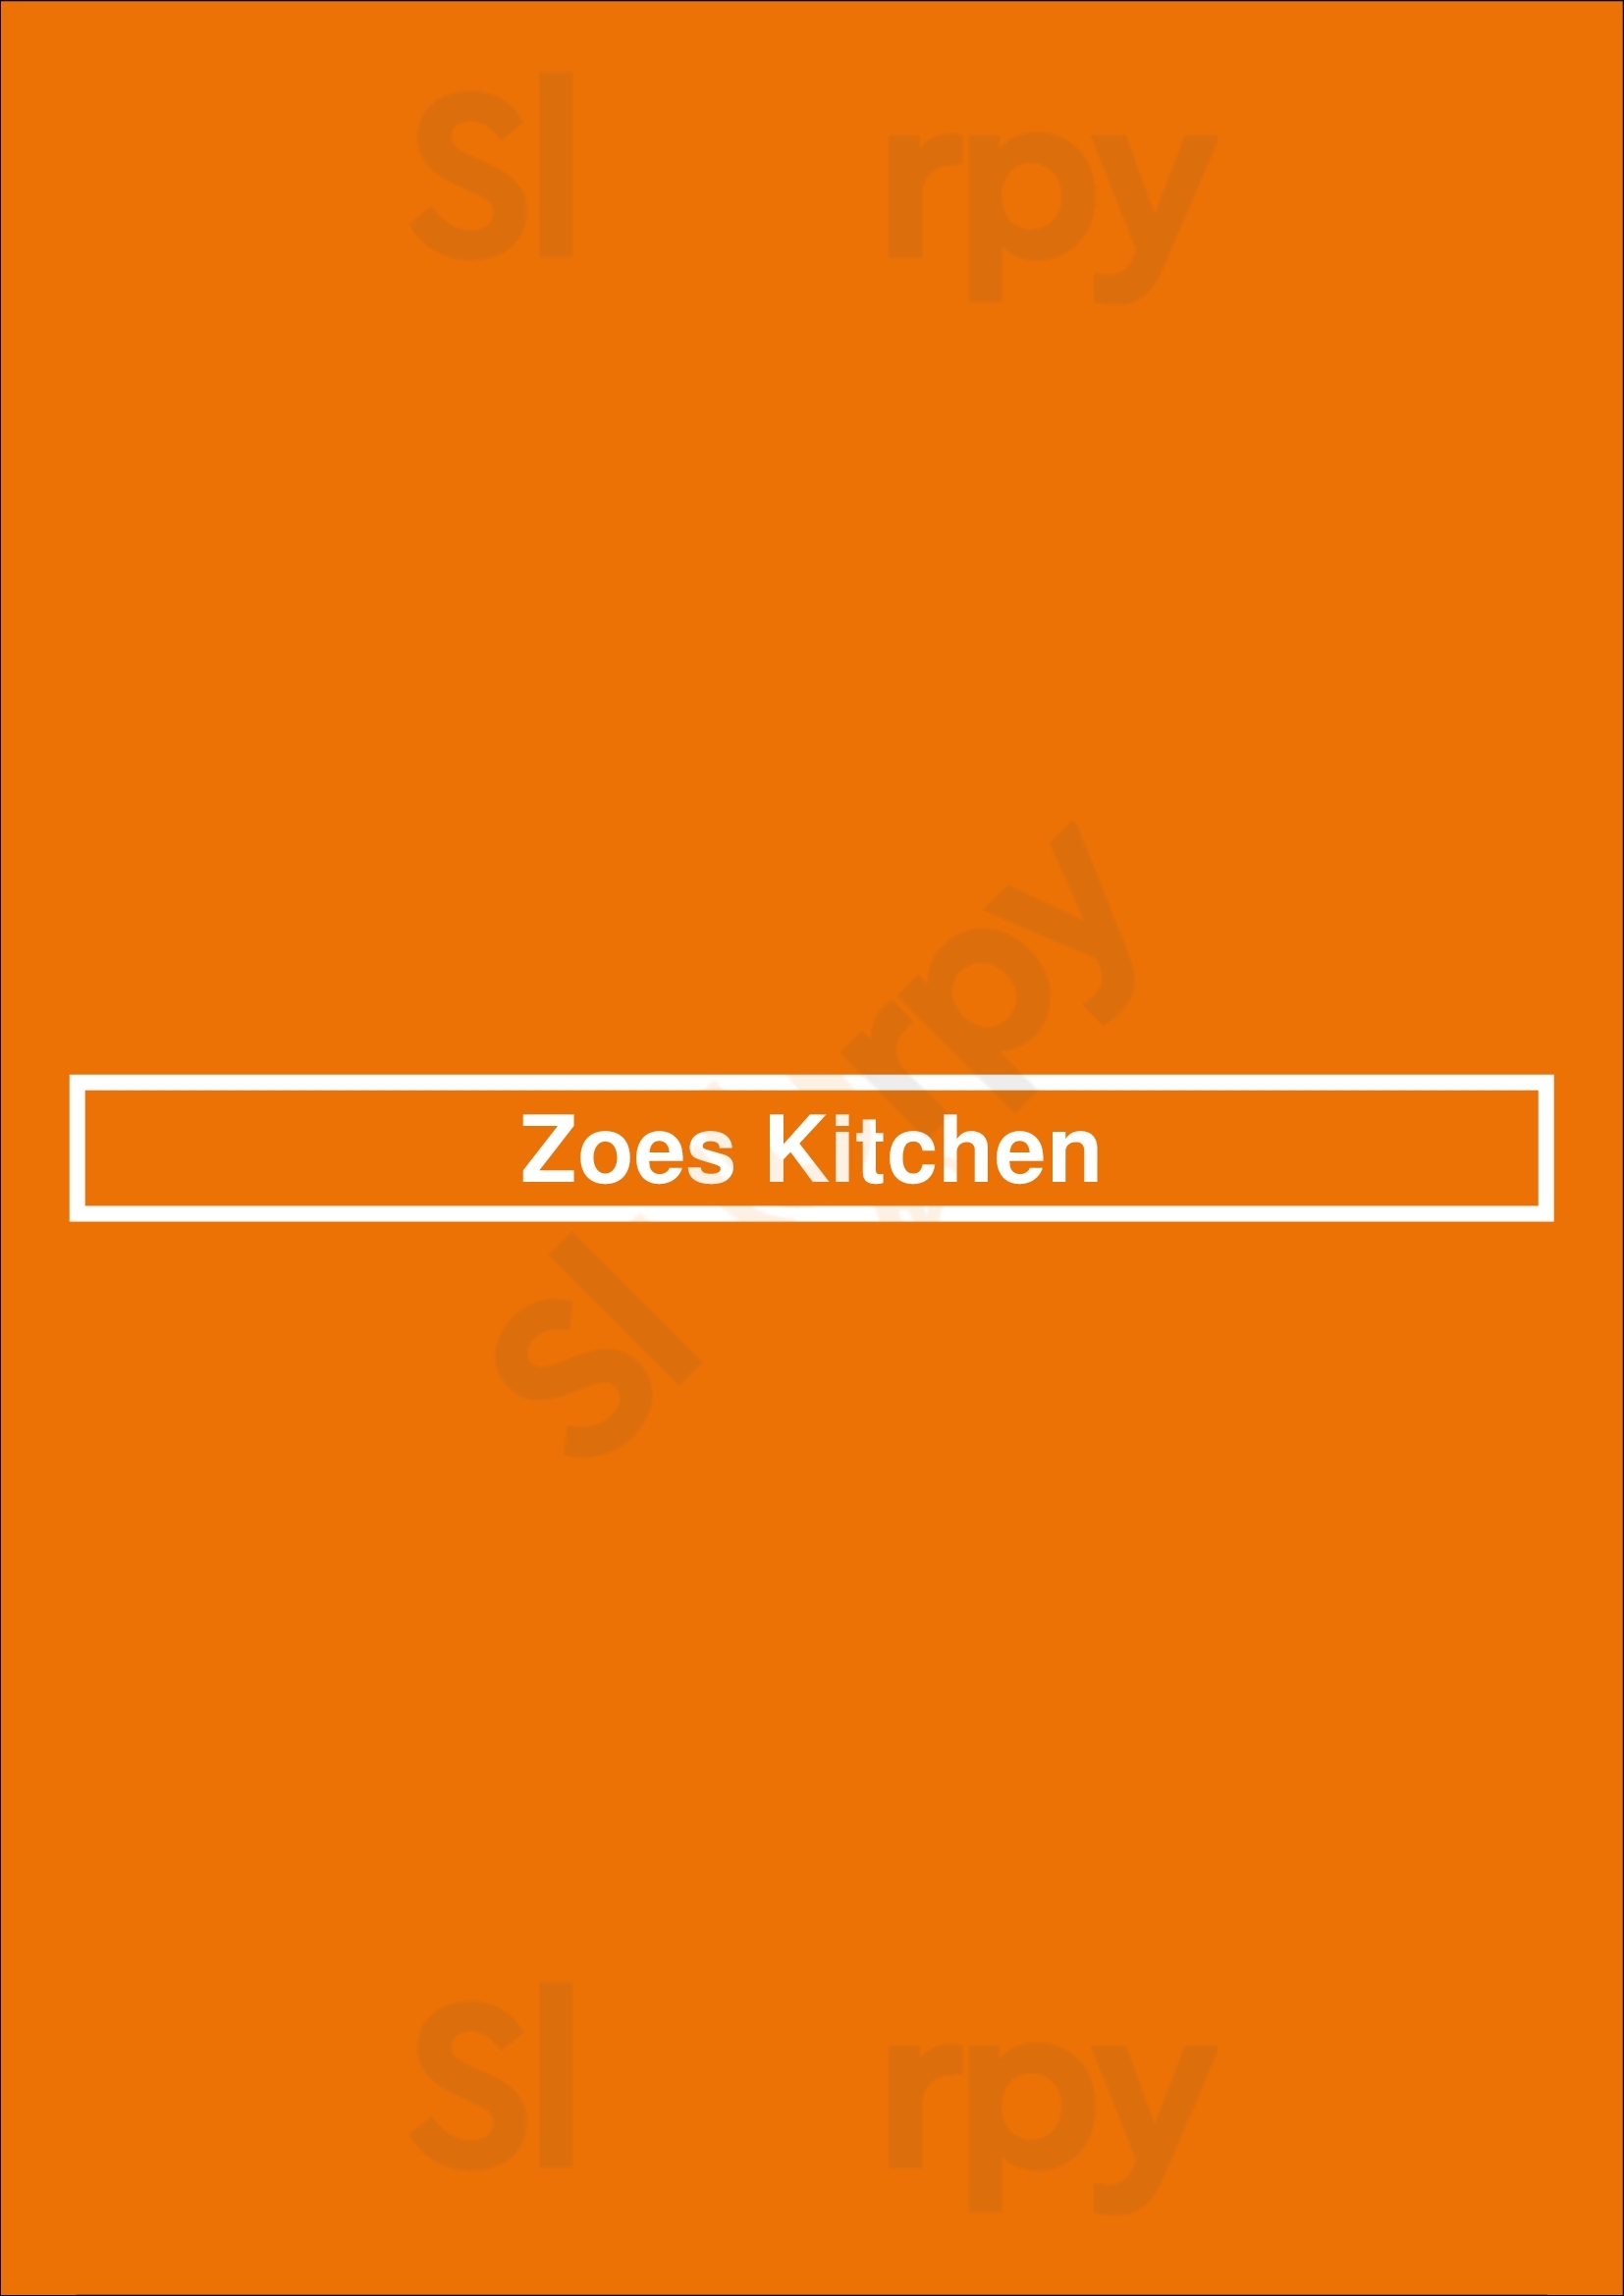 Zoes Kitchen Atlanta Menu - 1